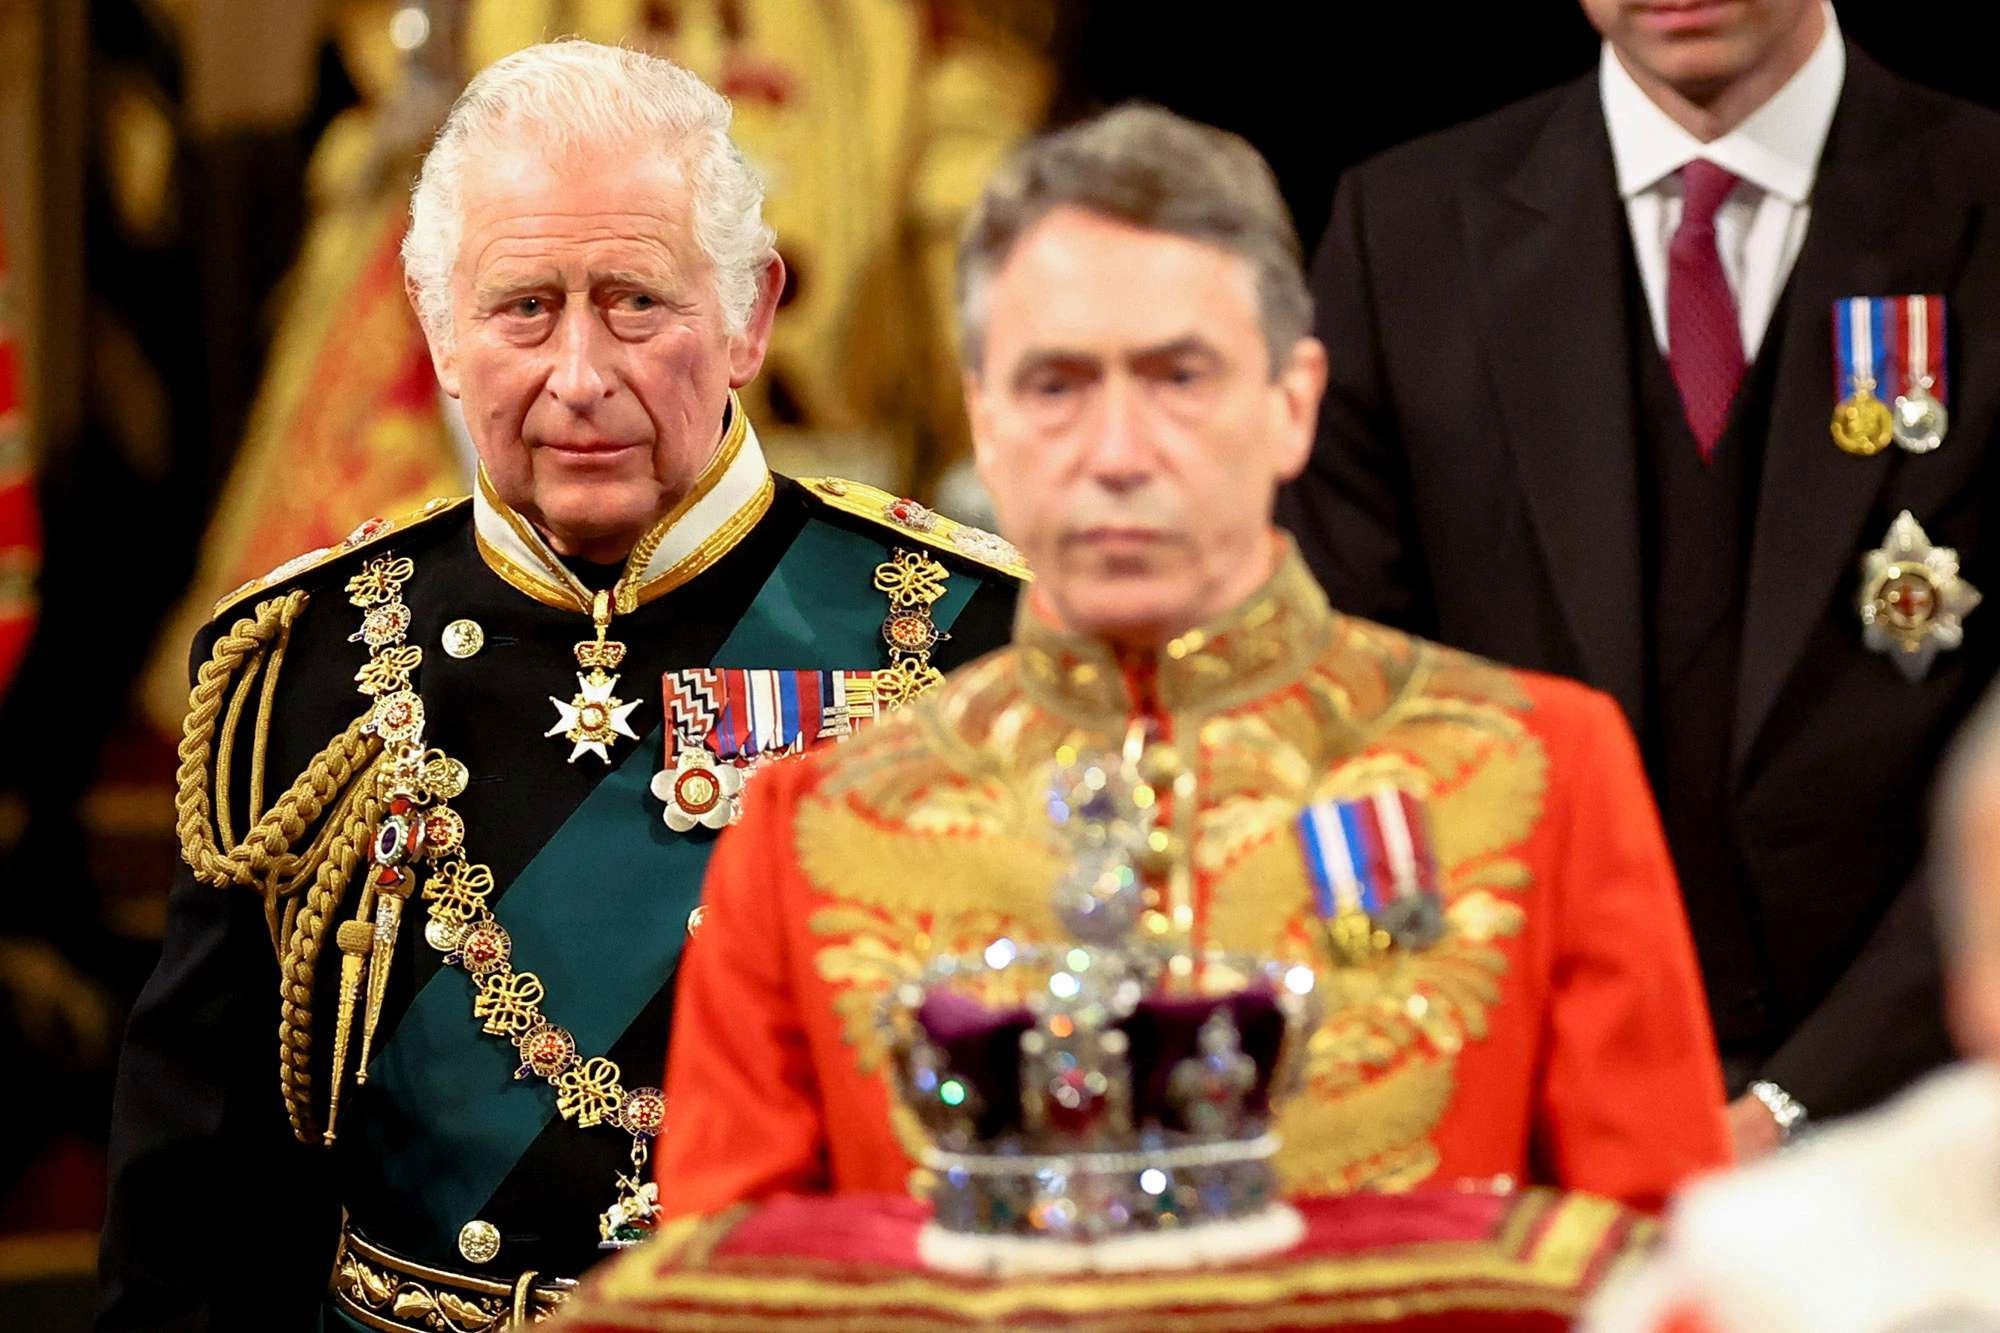 Dozens of big screens have been set up across the UK to watch Charles III’s coronation